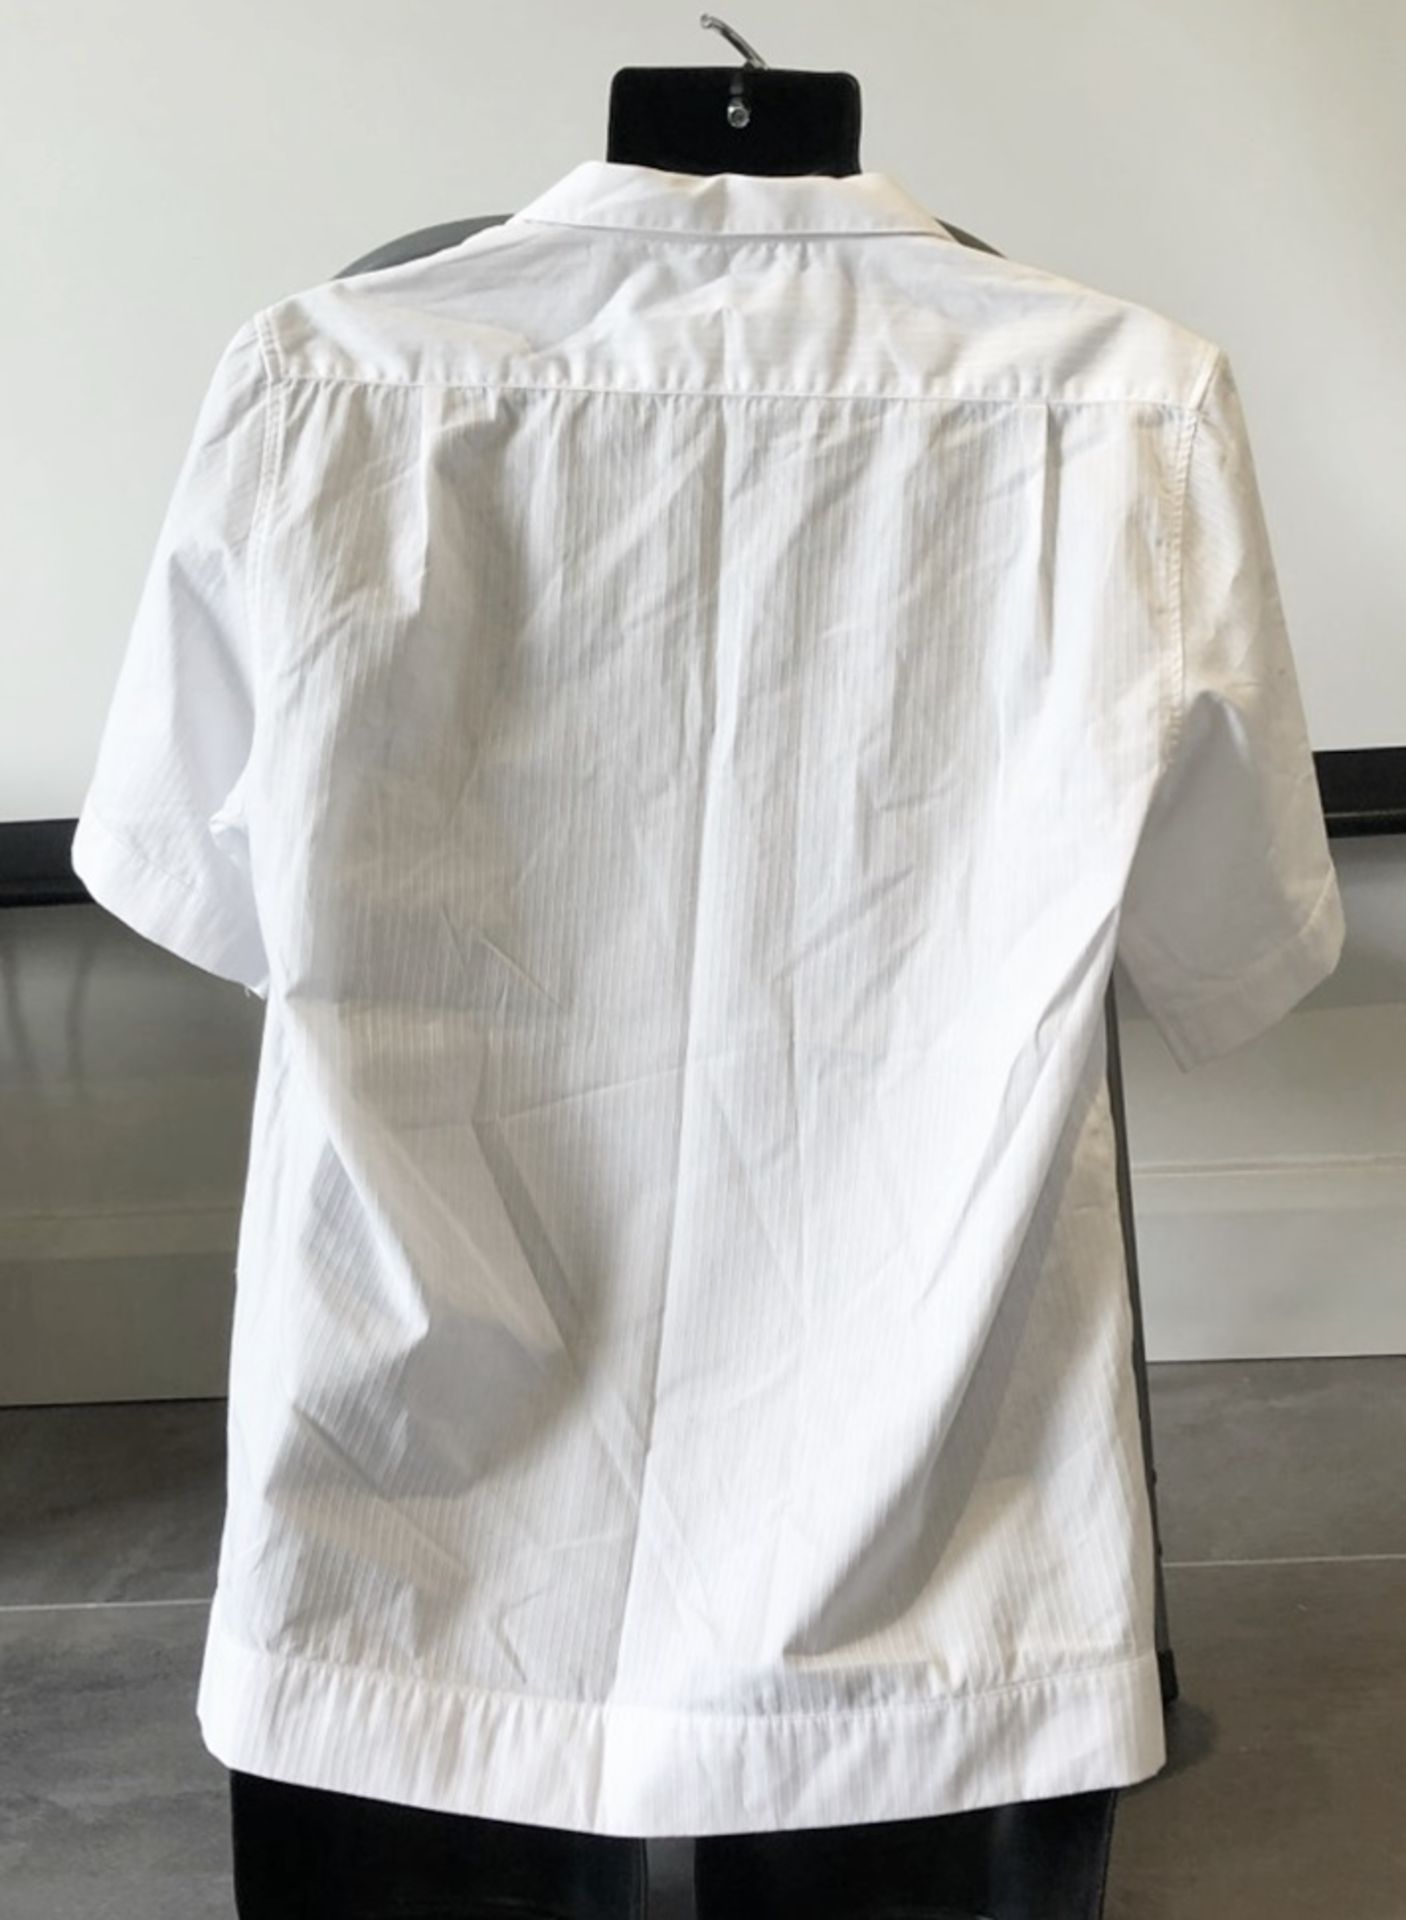 1 x Men's Genuine Jaquemus Designer Short Sleeve Shirt In White - Size: LARGE - RRP £250.00 - Image 6 of 7